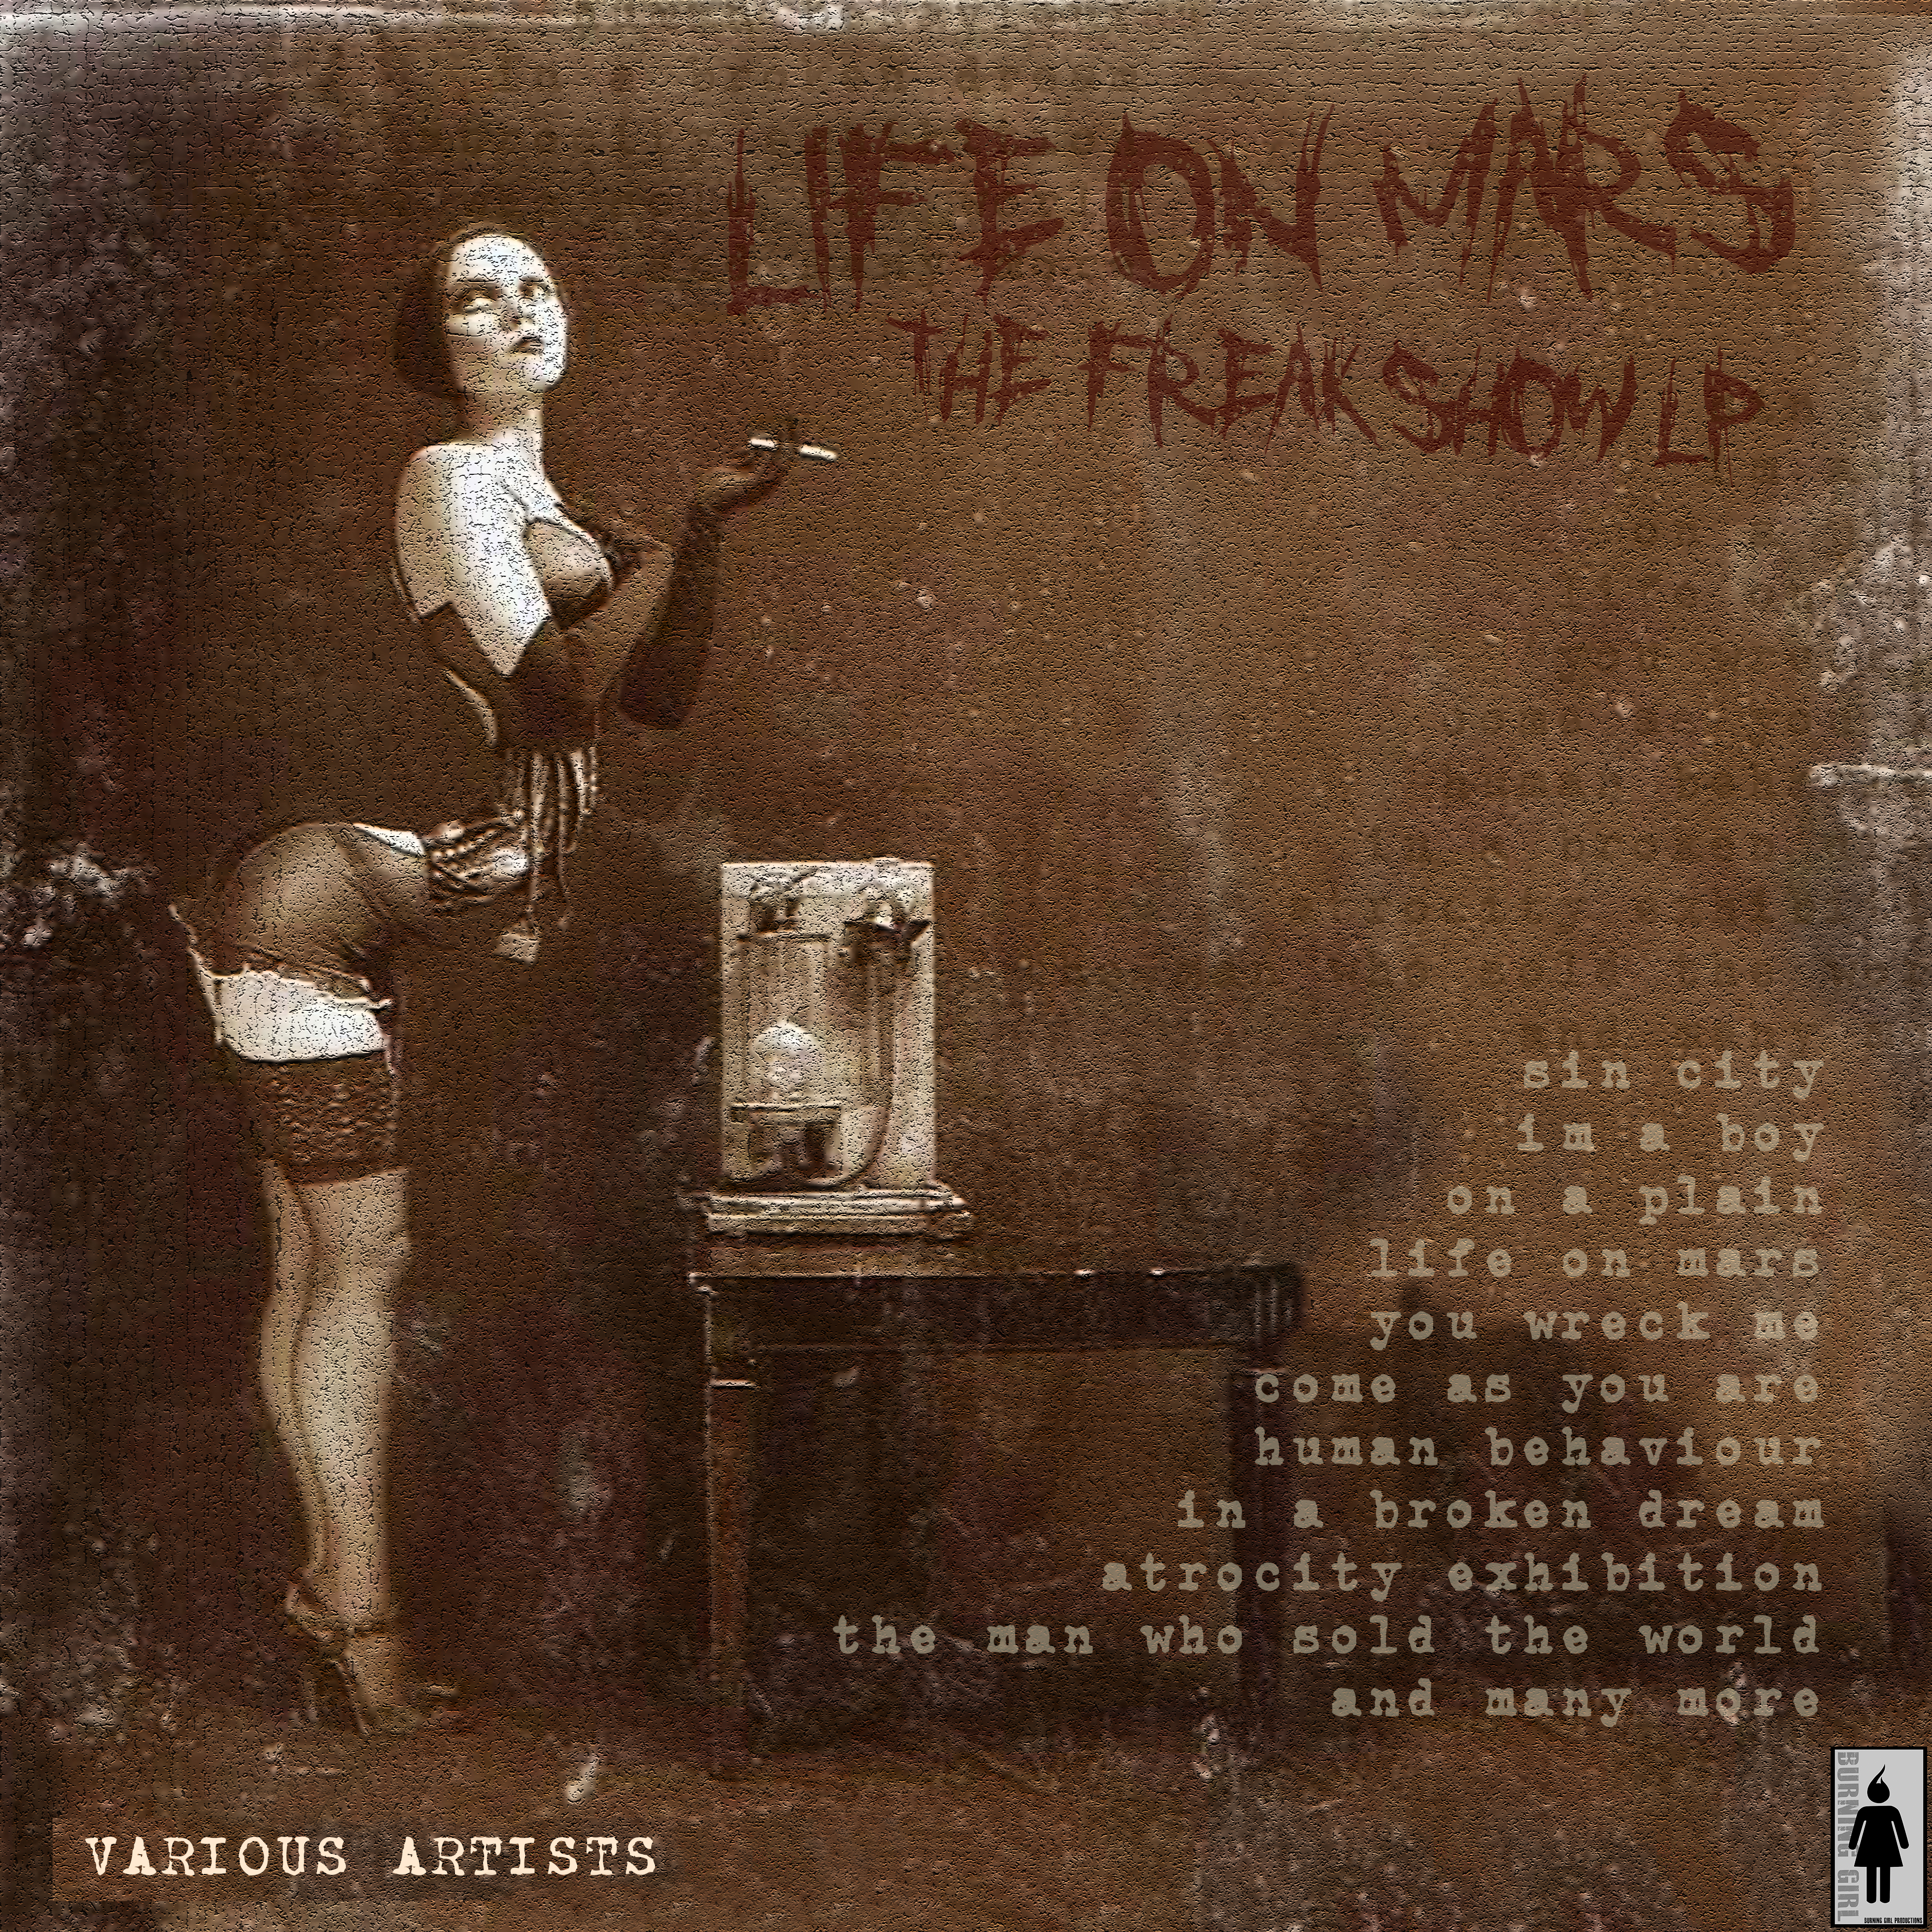 Life On My Mars-The Freakshow LP